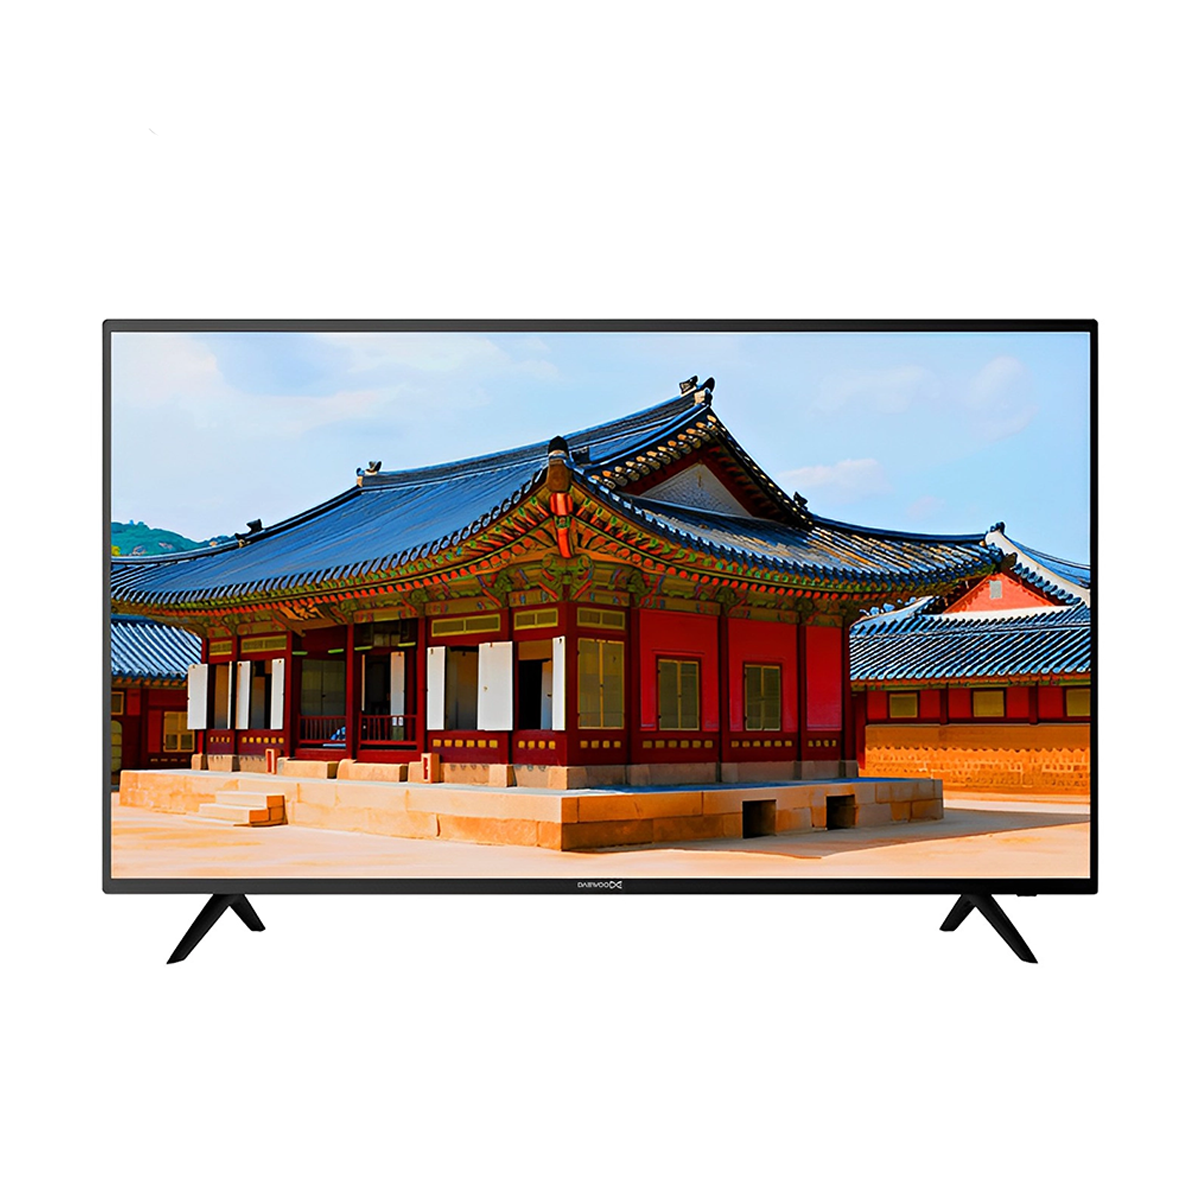 تلویزیون دوو مدل DLE-43MF1500EM سایز 43 اینچ